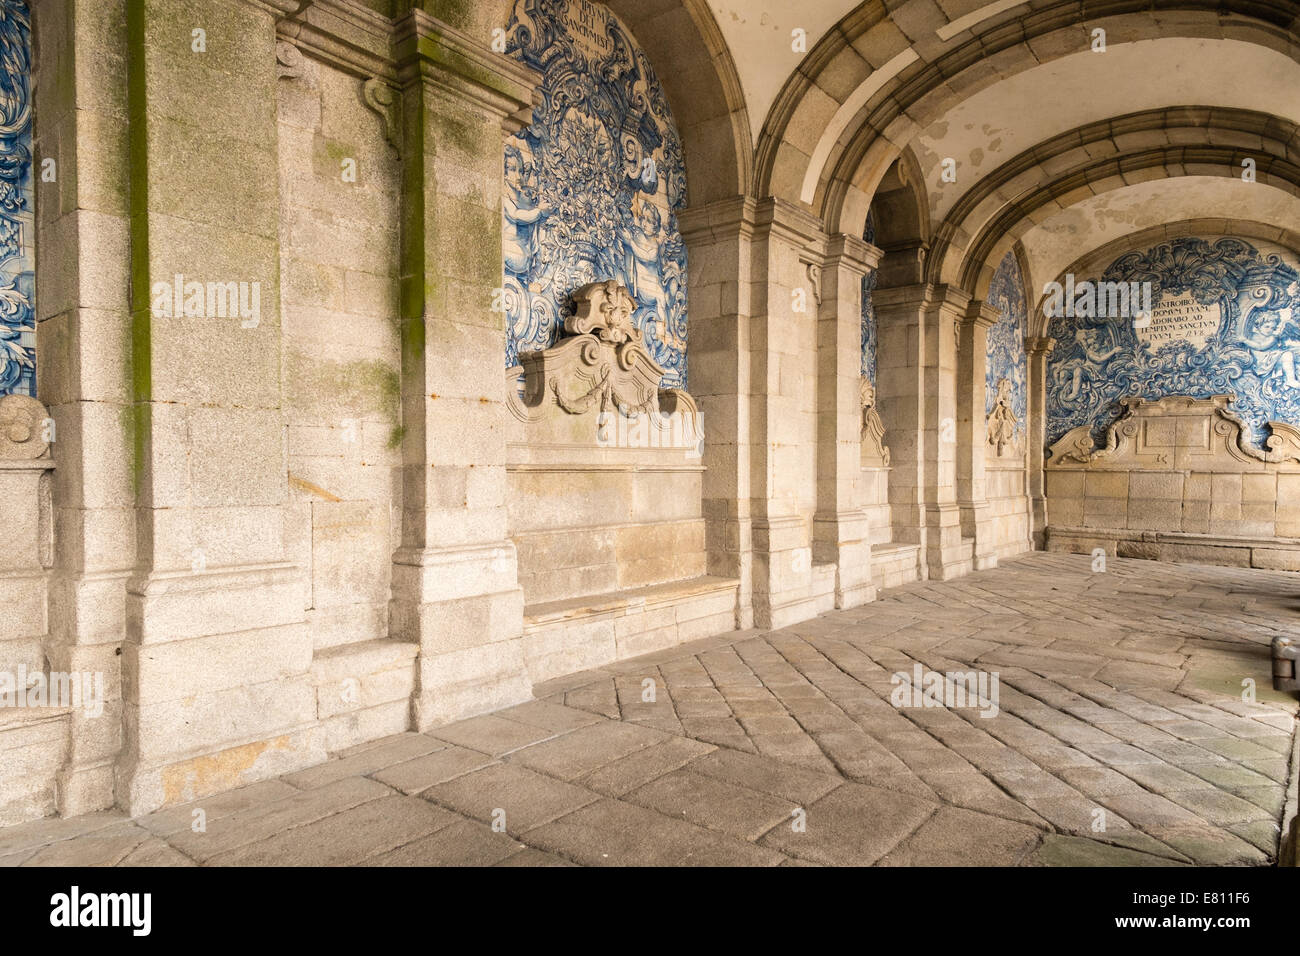 Catedral colonnade decorada con azulejos pintados a mano, Oporto, Portugal. Foto de stock